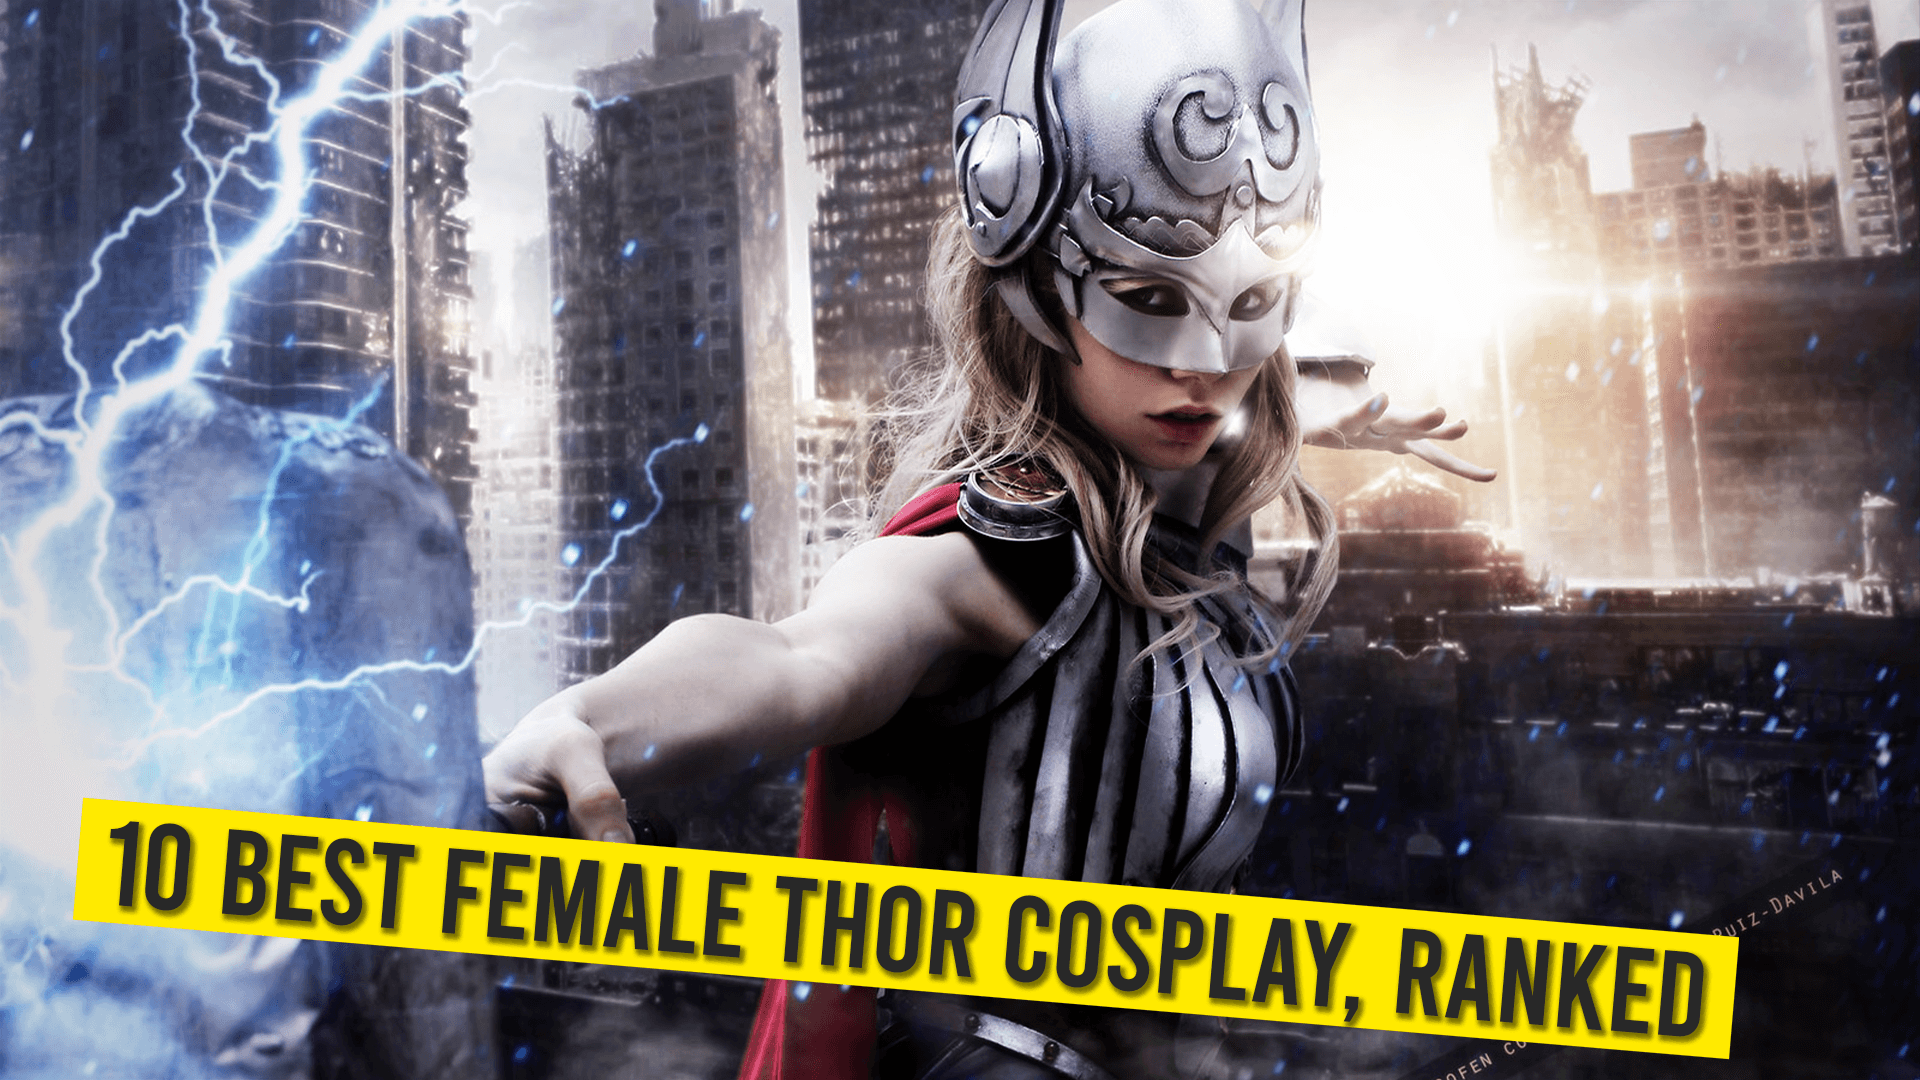 10 Best Female Thor Cosplay, Ranked!